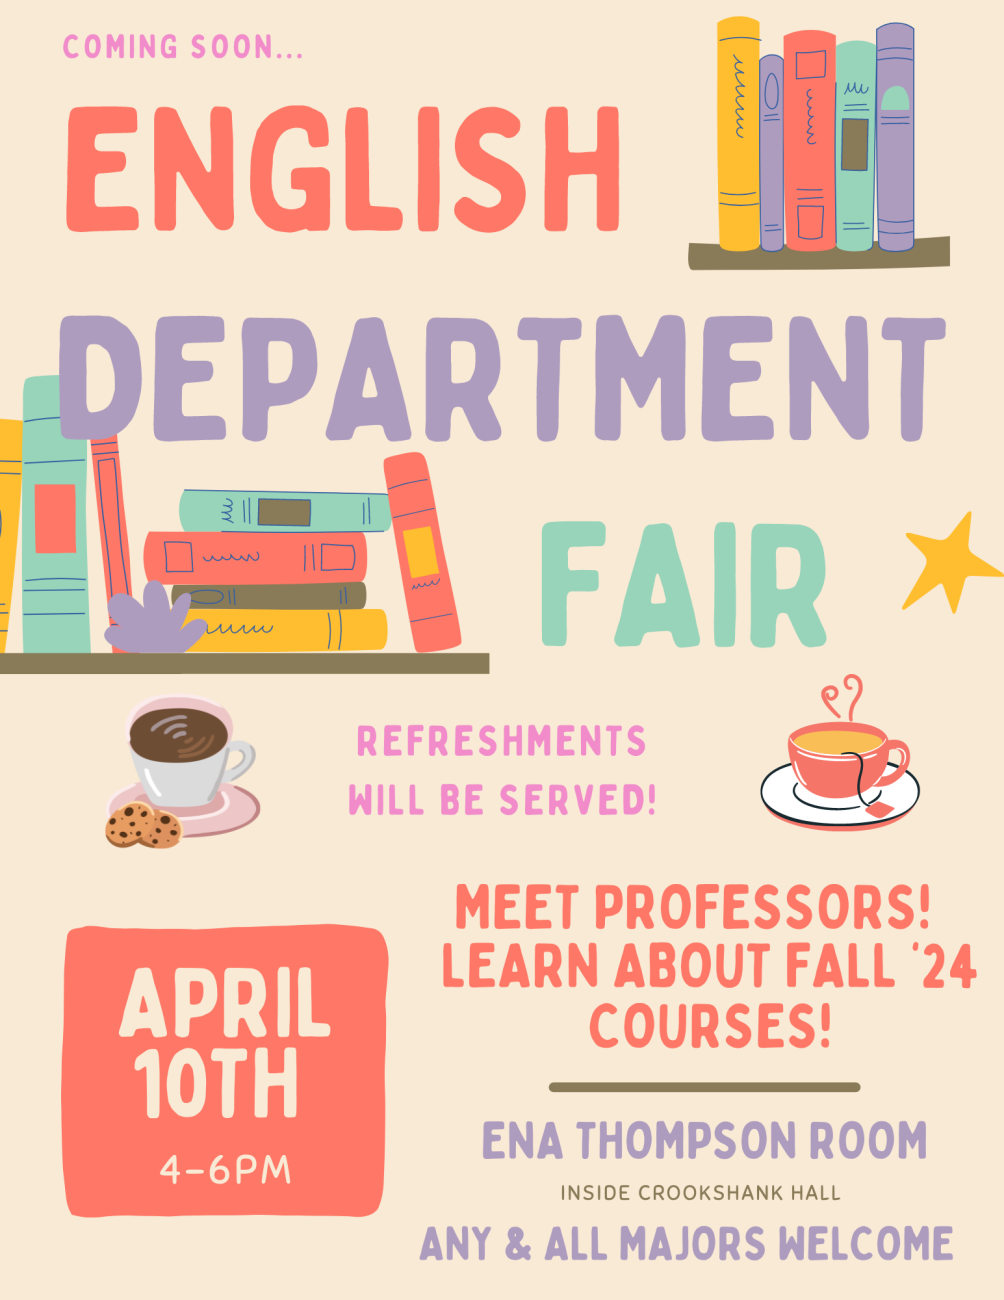 English Department Fair April 10th - Crookshank 108 4pm-6pm